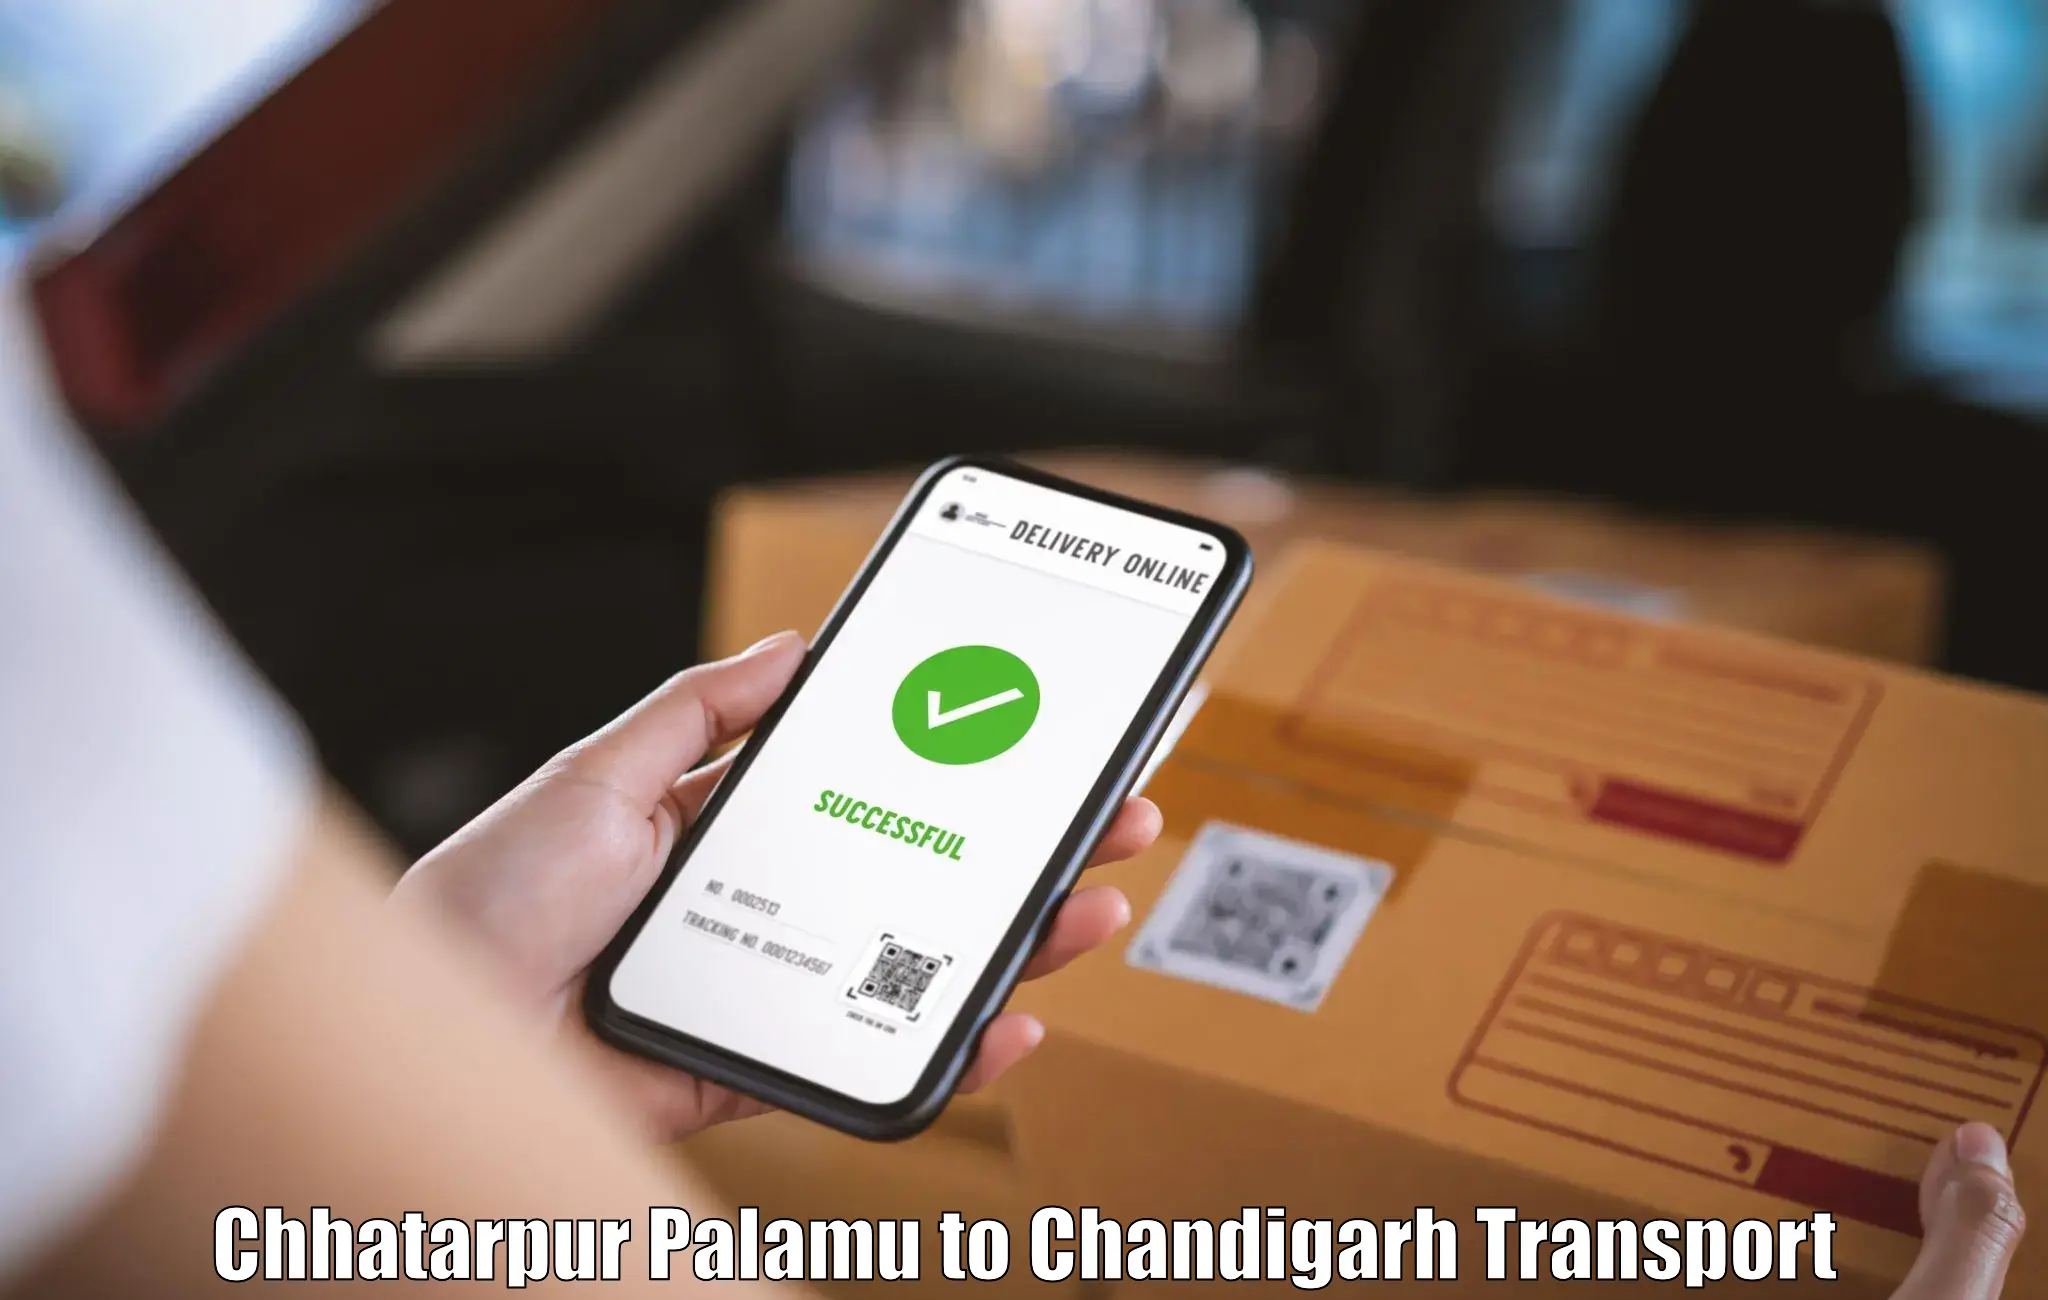 Road transport online services Chhatarpur Palamu to Chandigarh